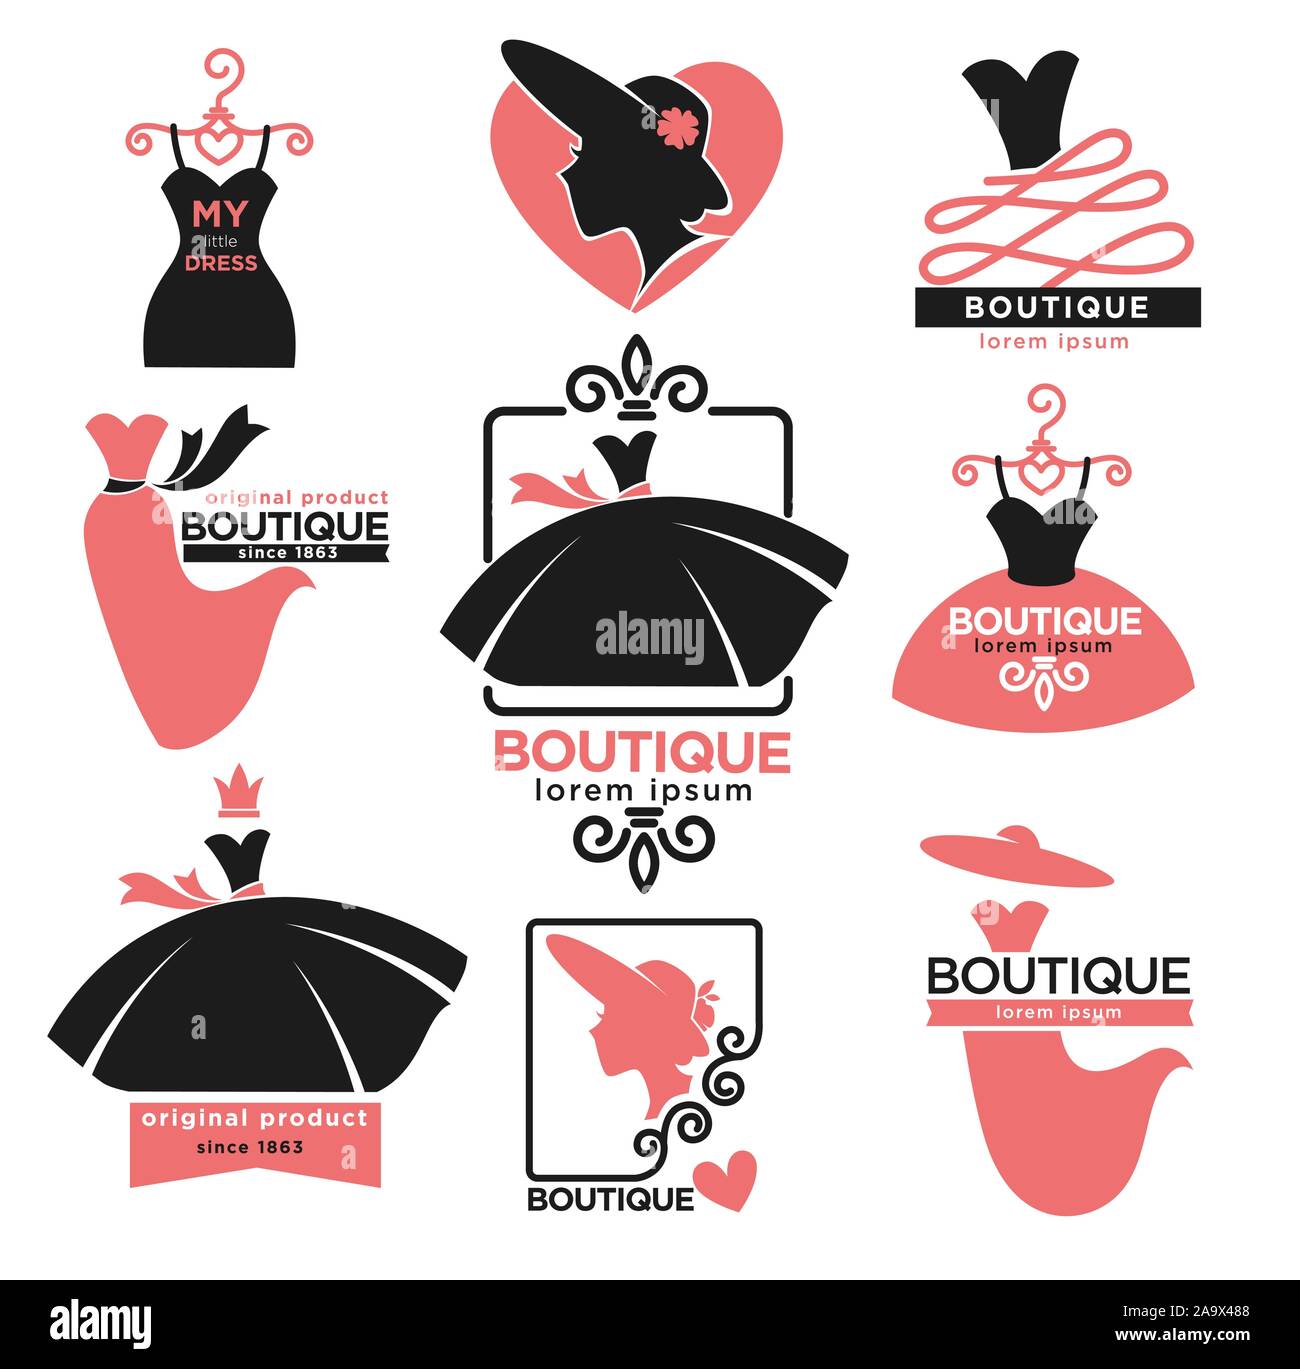 Arcachon , Aquitaine / France - 10 08 2019 : Ba&sh Sign Logo Store Women  Clothing Stores Shop Editorial Stock Photo - Image of icon, corset:  160638363